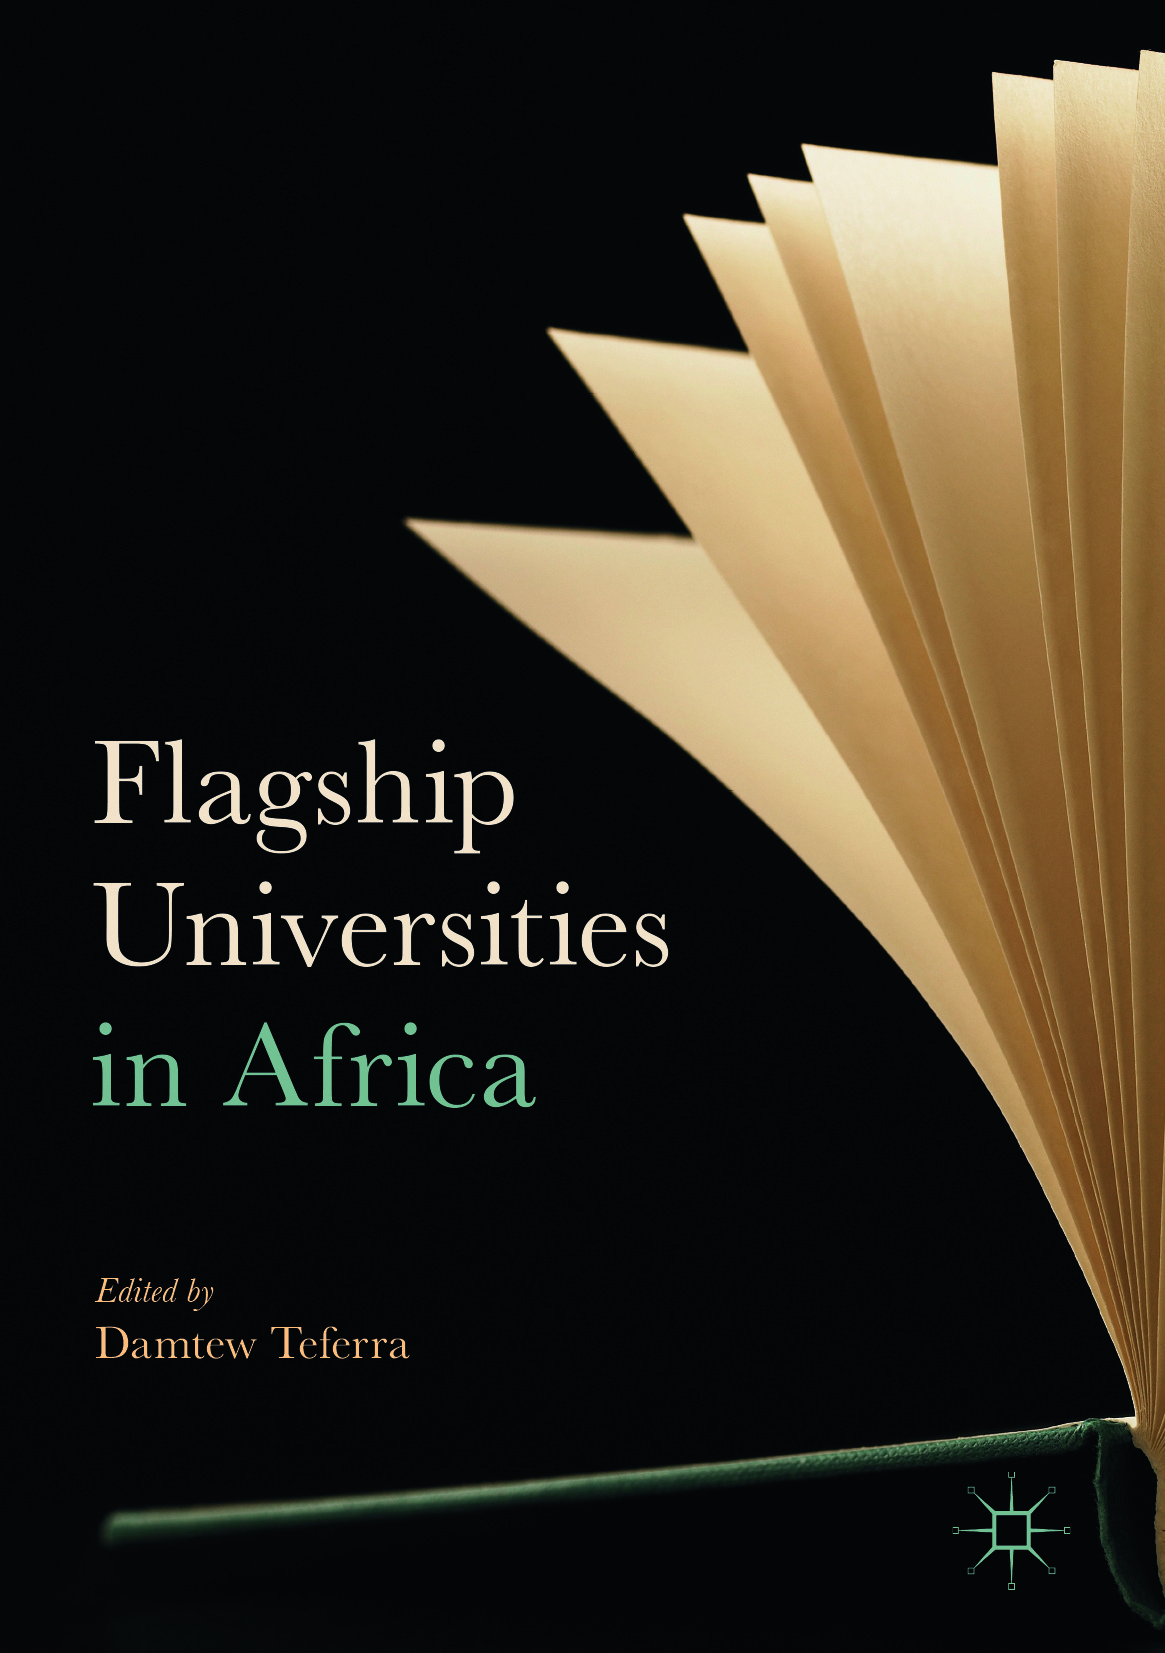 Teferra, Damtew - Flagship Universities in Africa, ebook